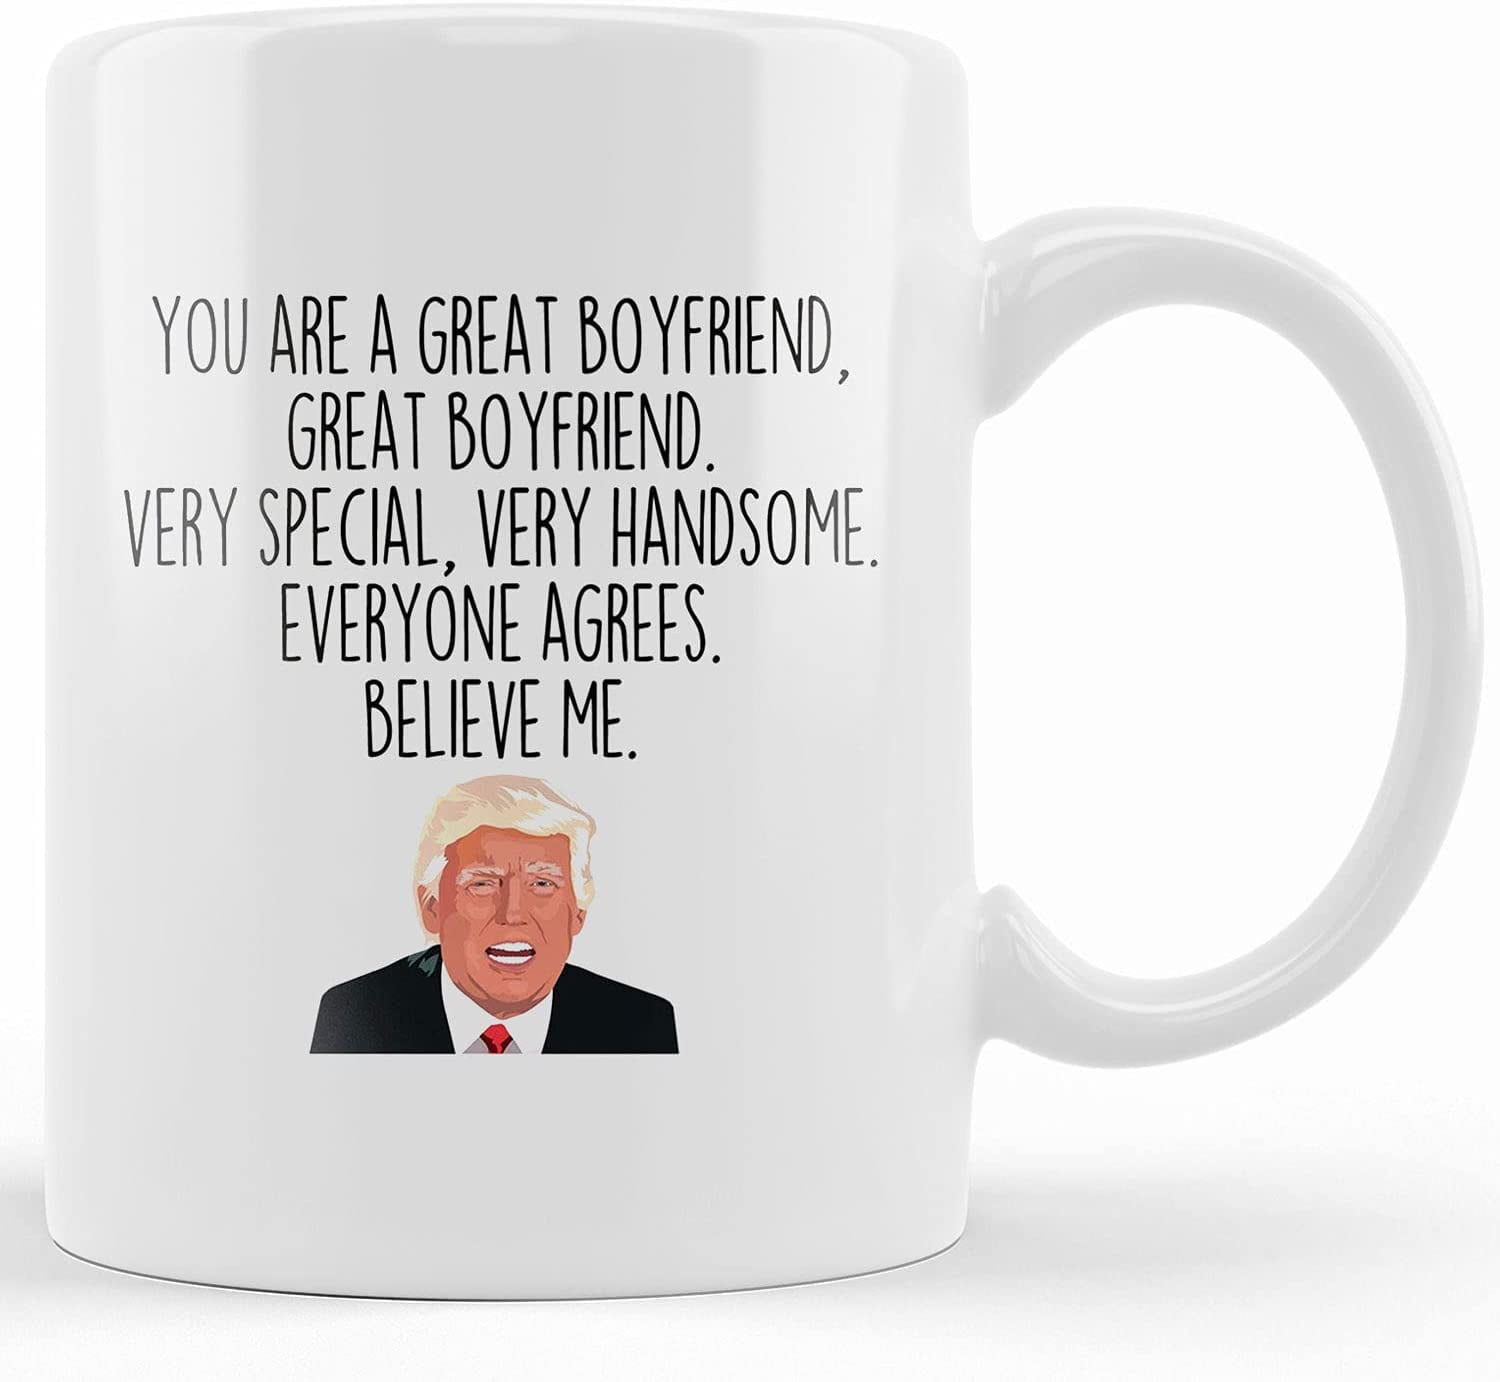 Amazon.com: Wisegem Boyfriend Gifts - Boyfriend Blanket from Girlfriend -  Sentimental Gifts for Boyfriend - Romantic Gifts for Him 60